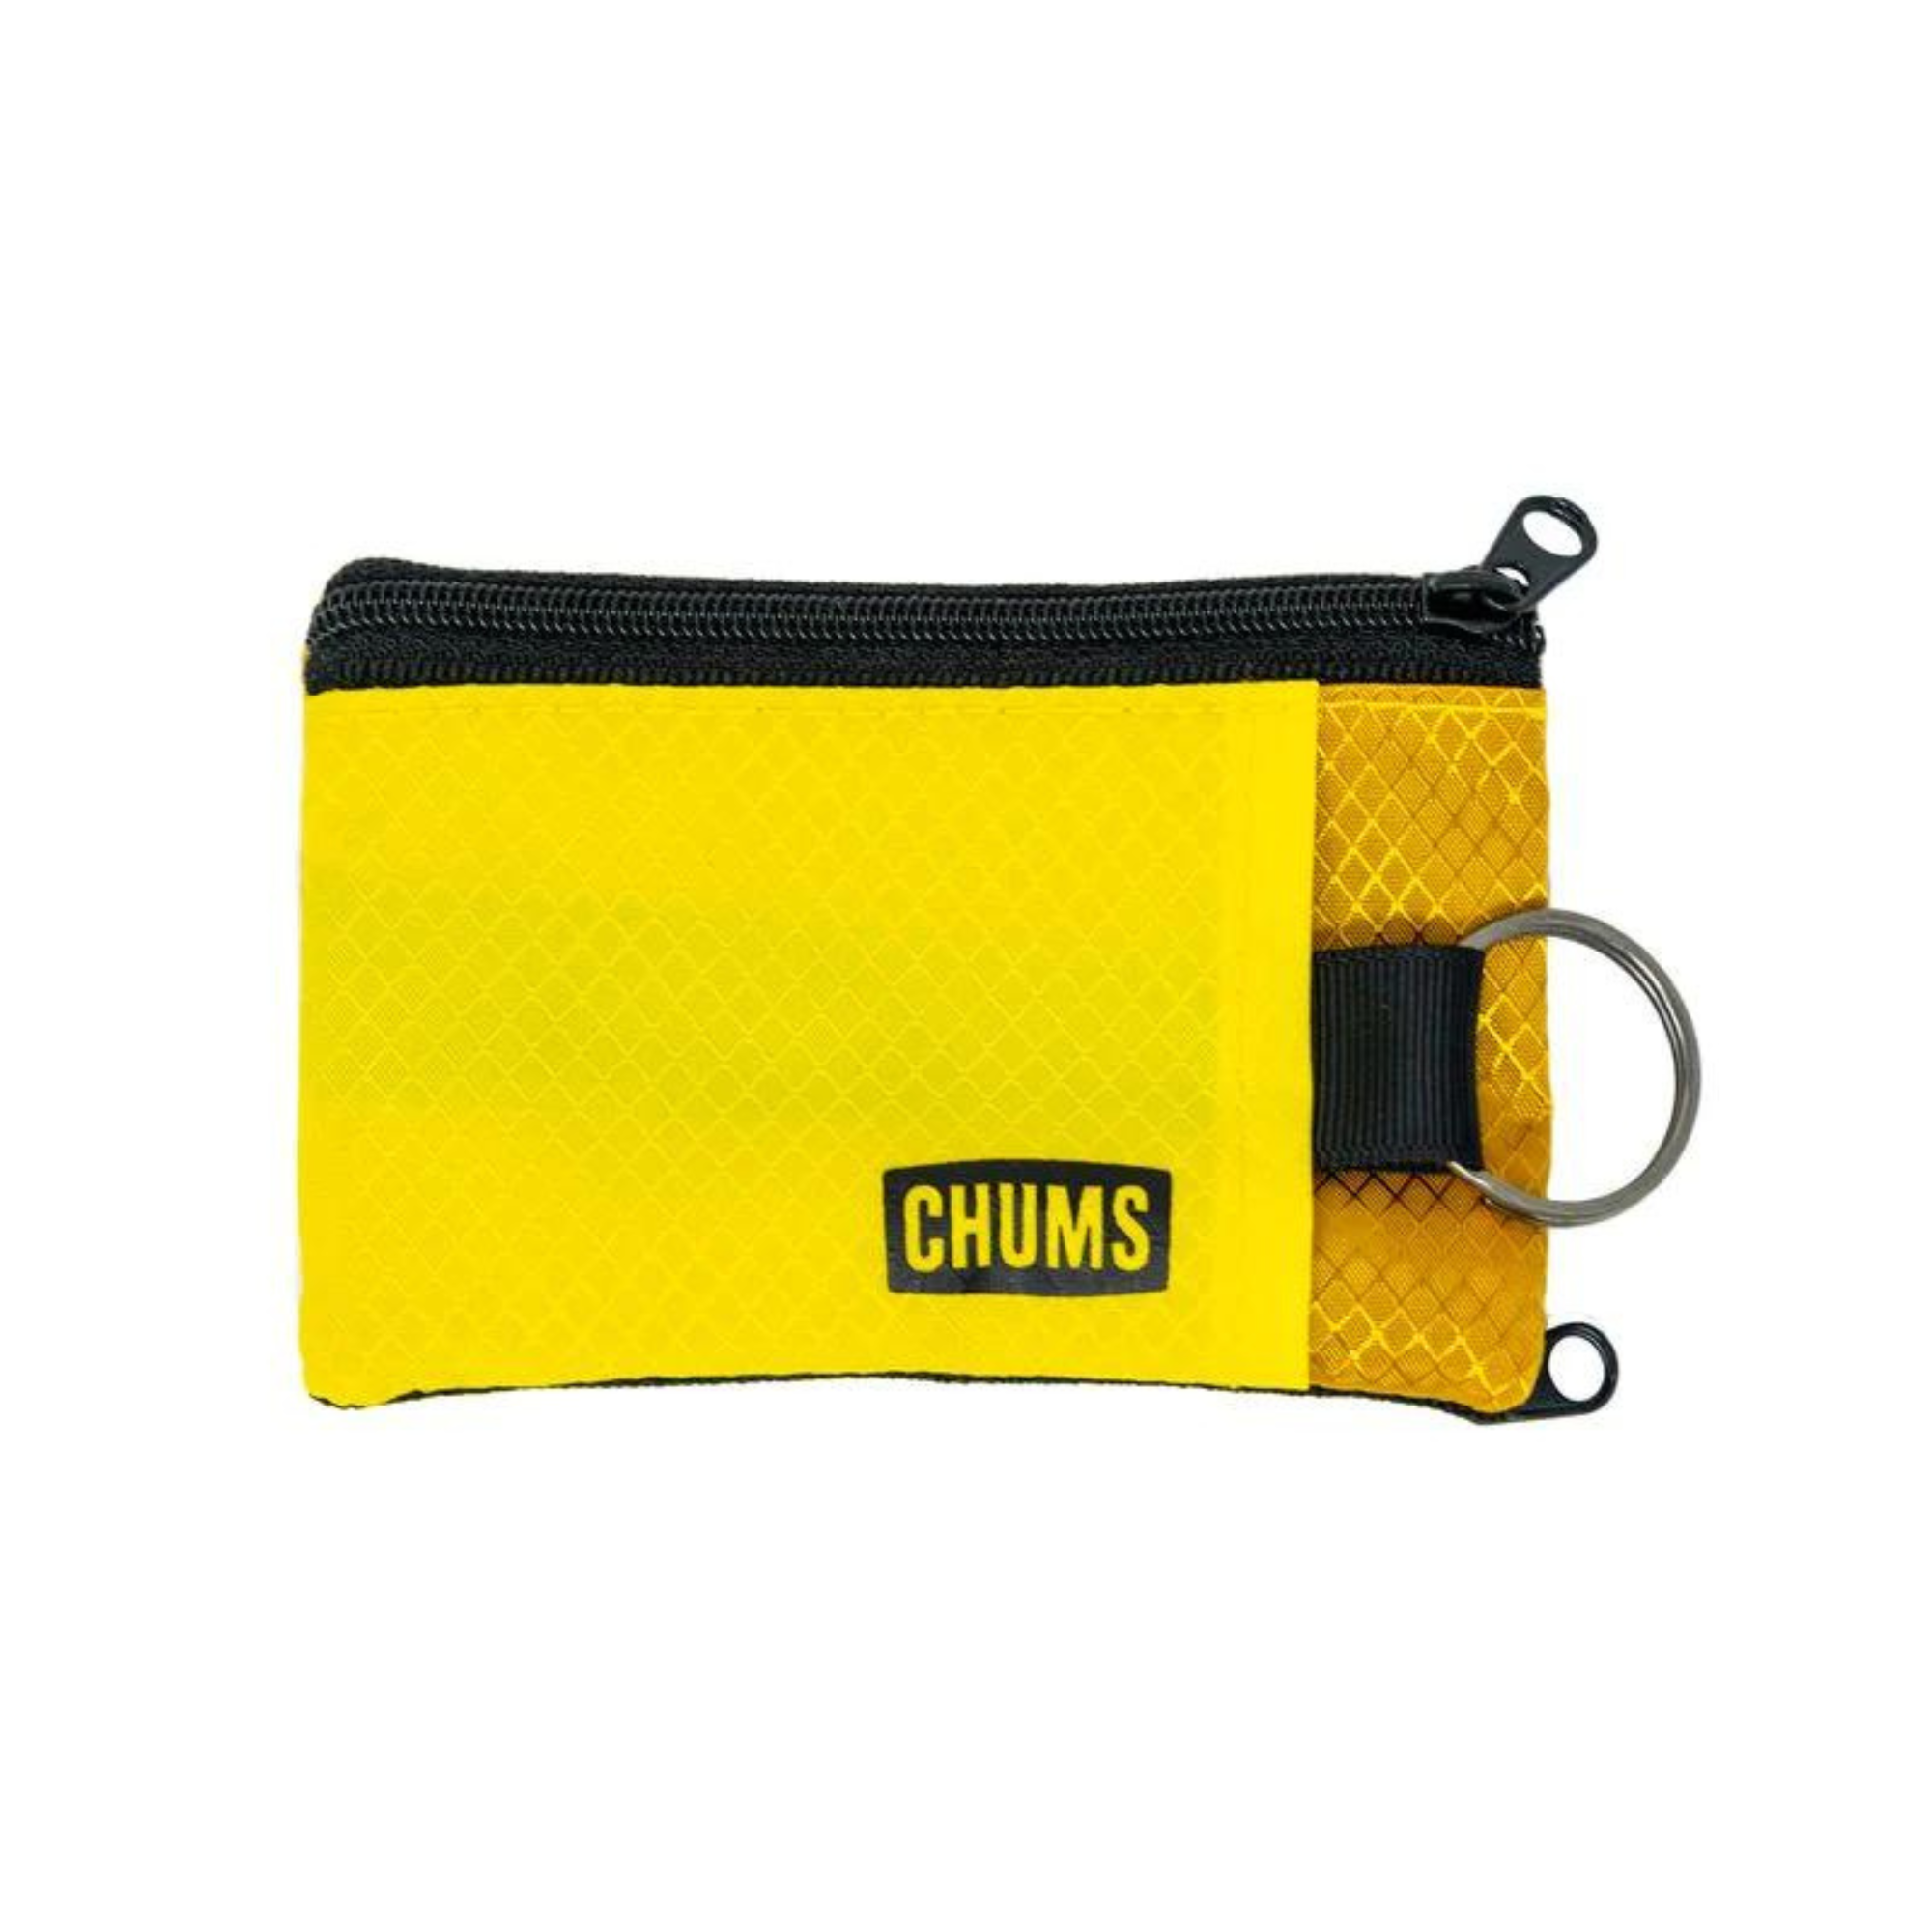 Chums Surf-Shorts Wallet